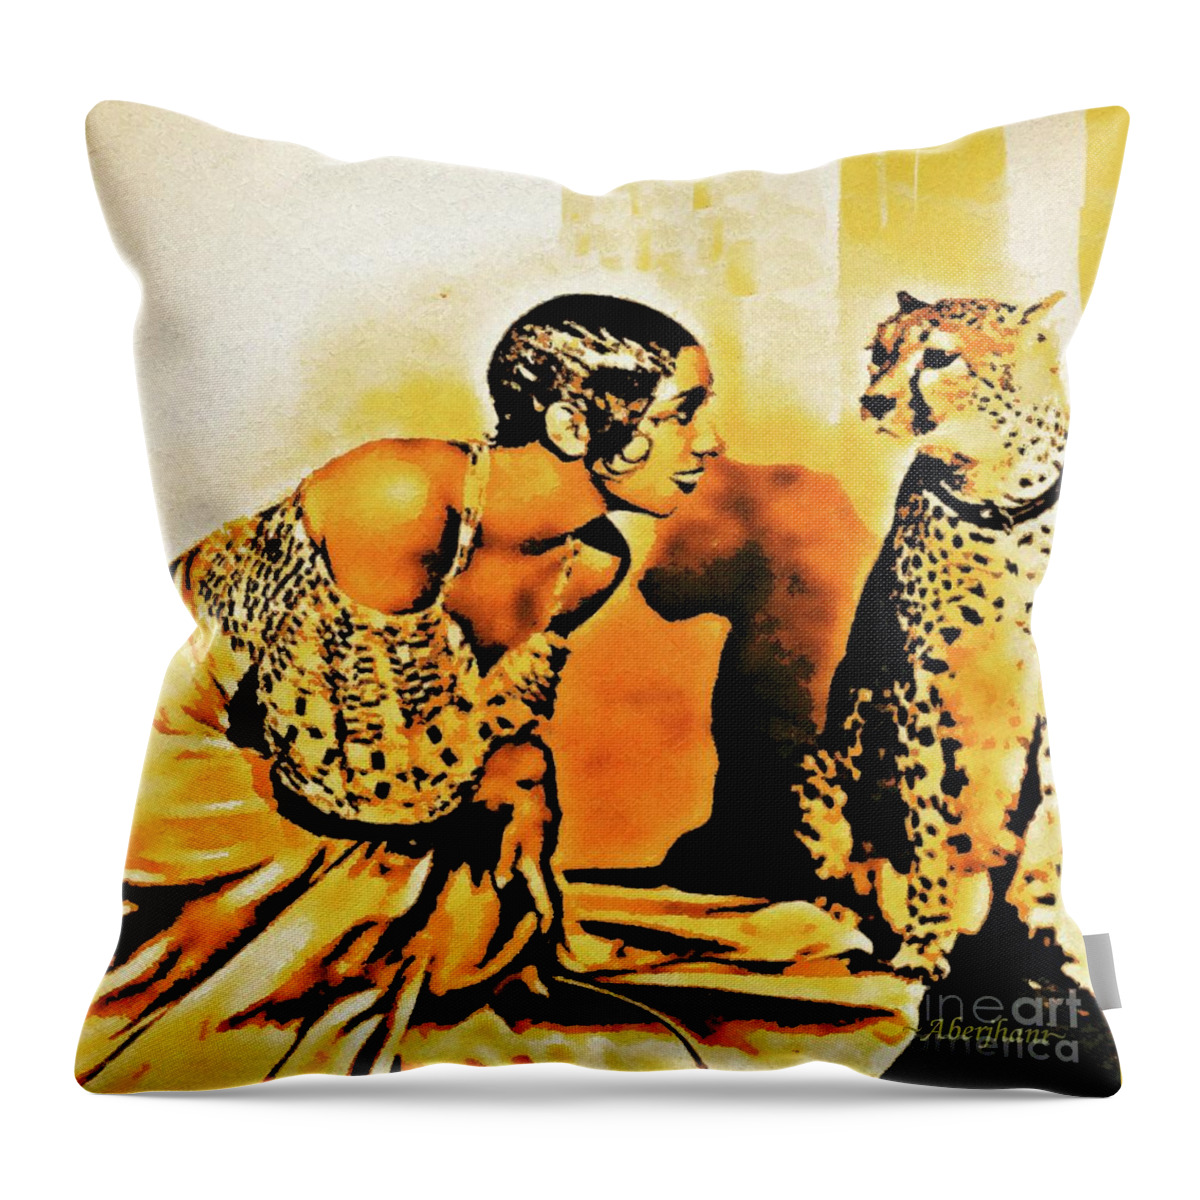 Josephine Baker’s Love Affair Throw Pillow featuring the digital art Josephine Baker and Chiquita the Cheetah Number 2 by Aberjhani